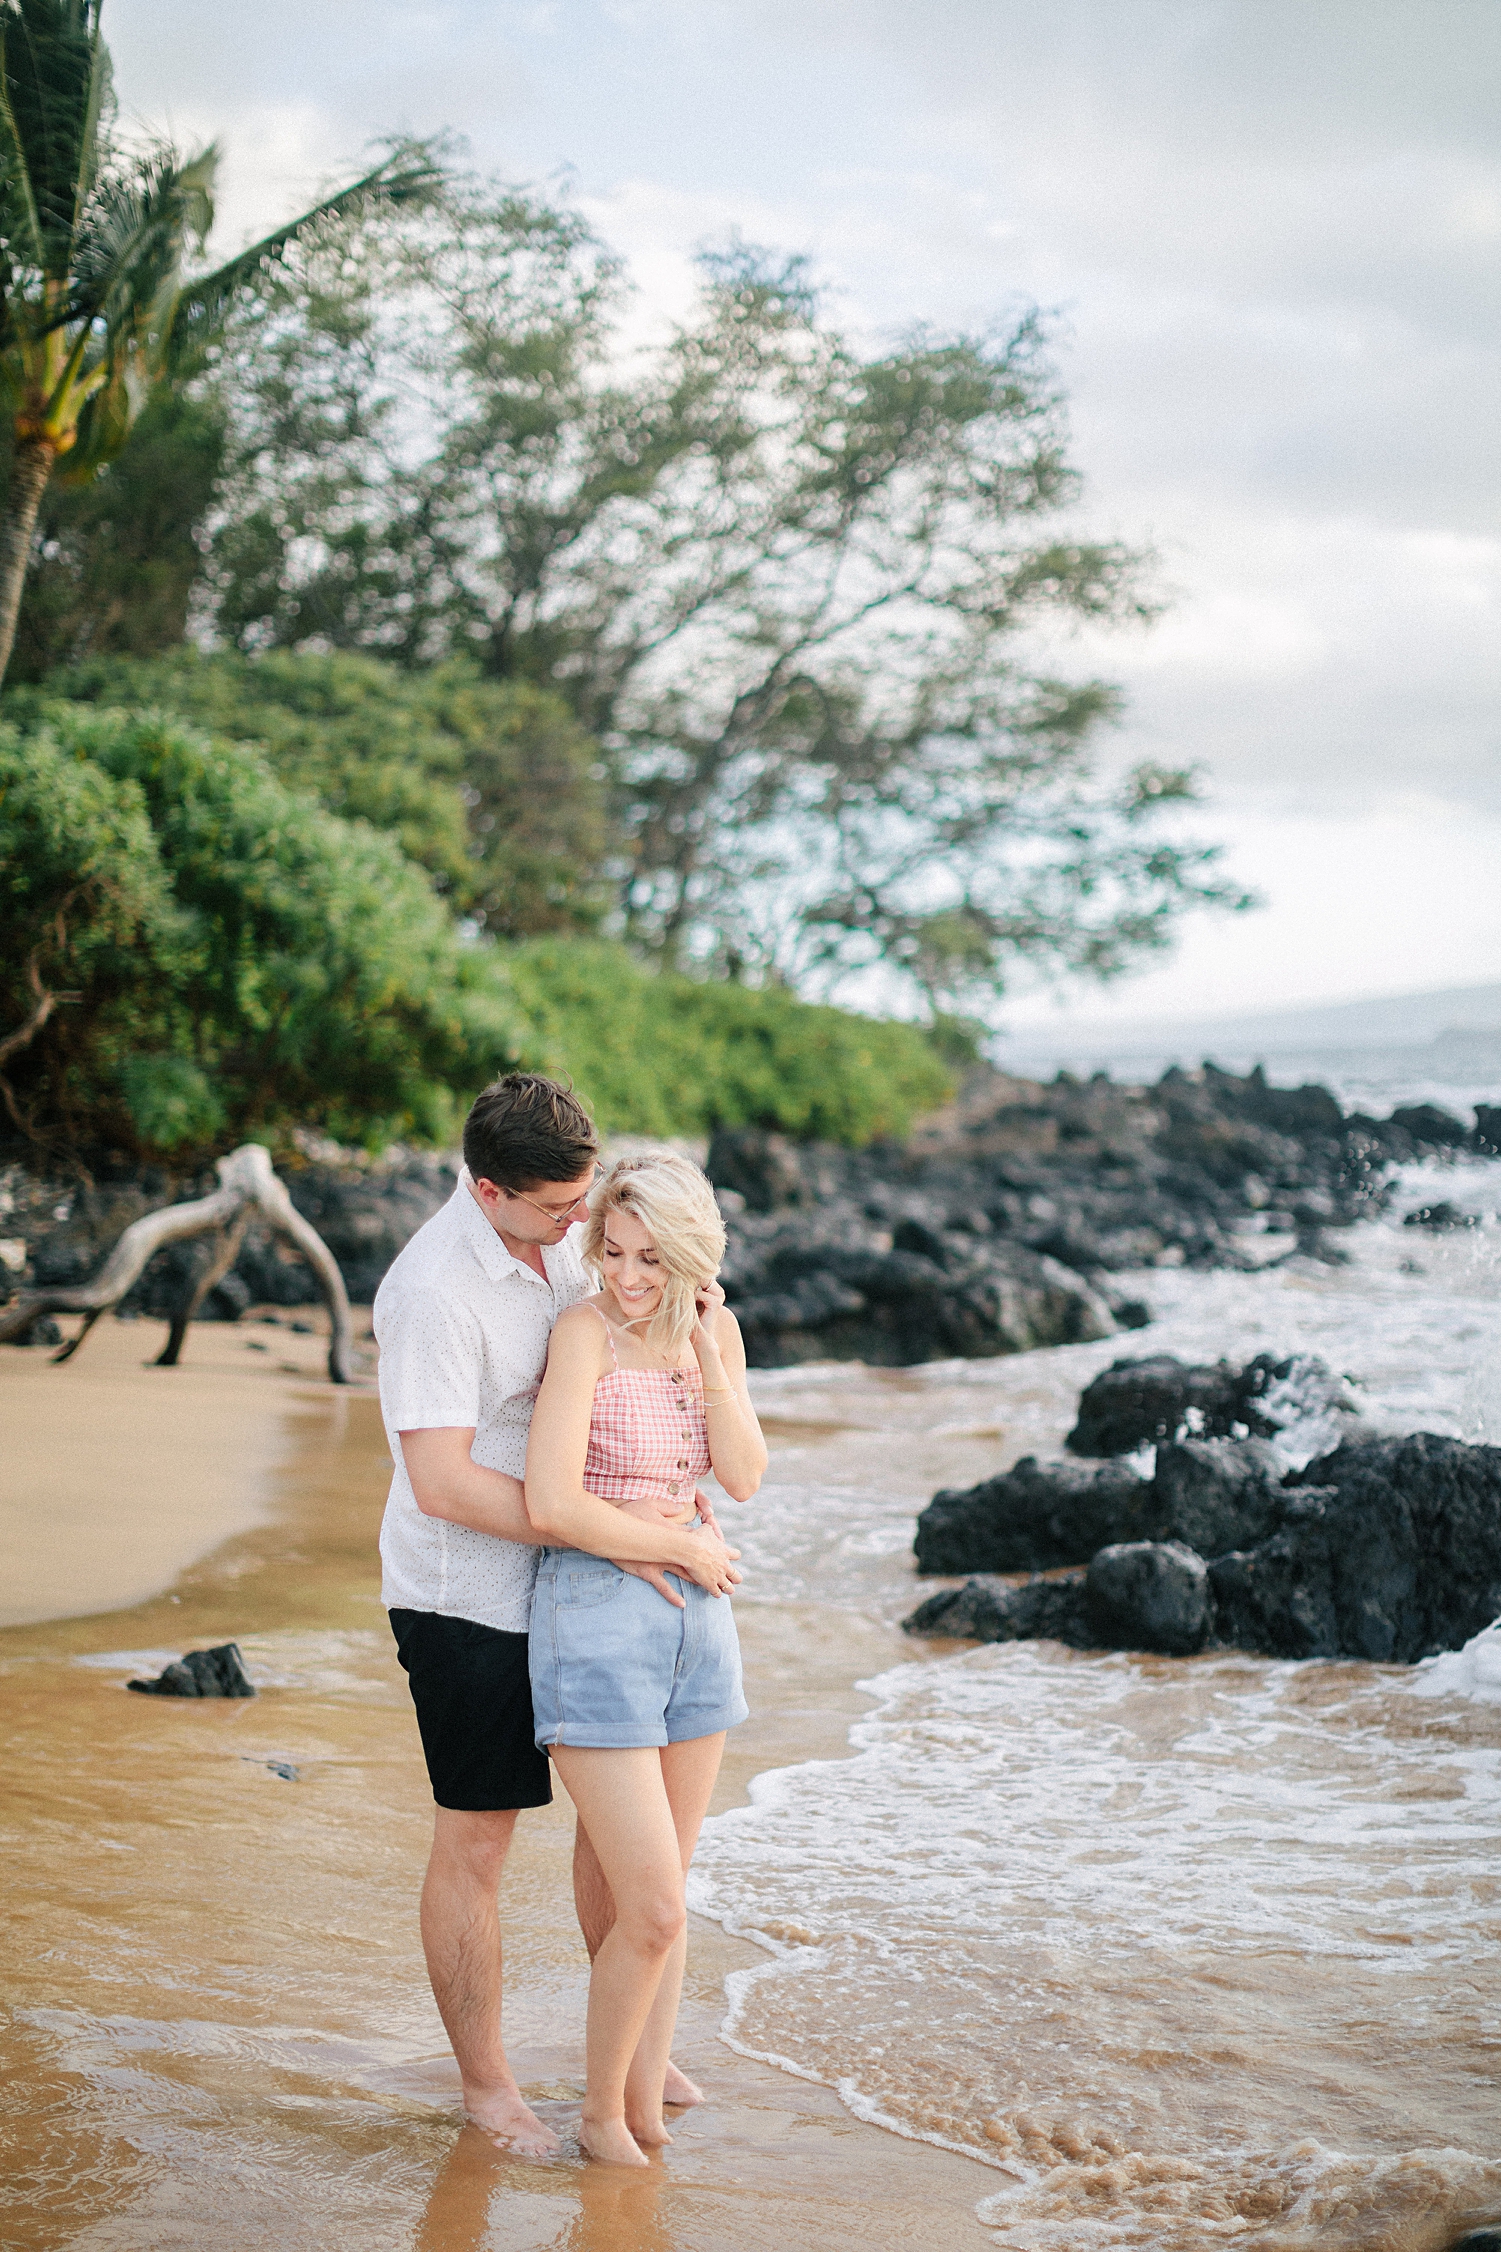 man with arms around woman on beach in Maui hawaii